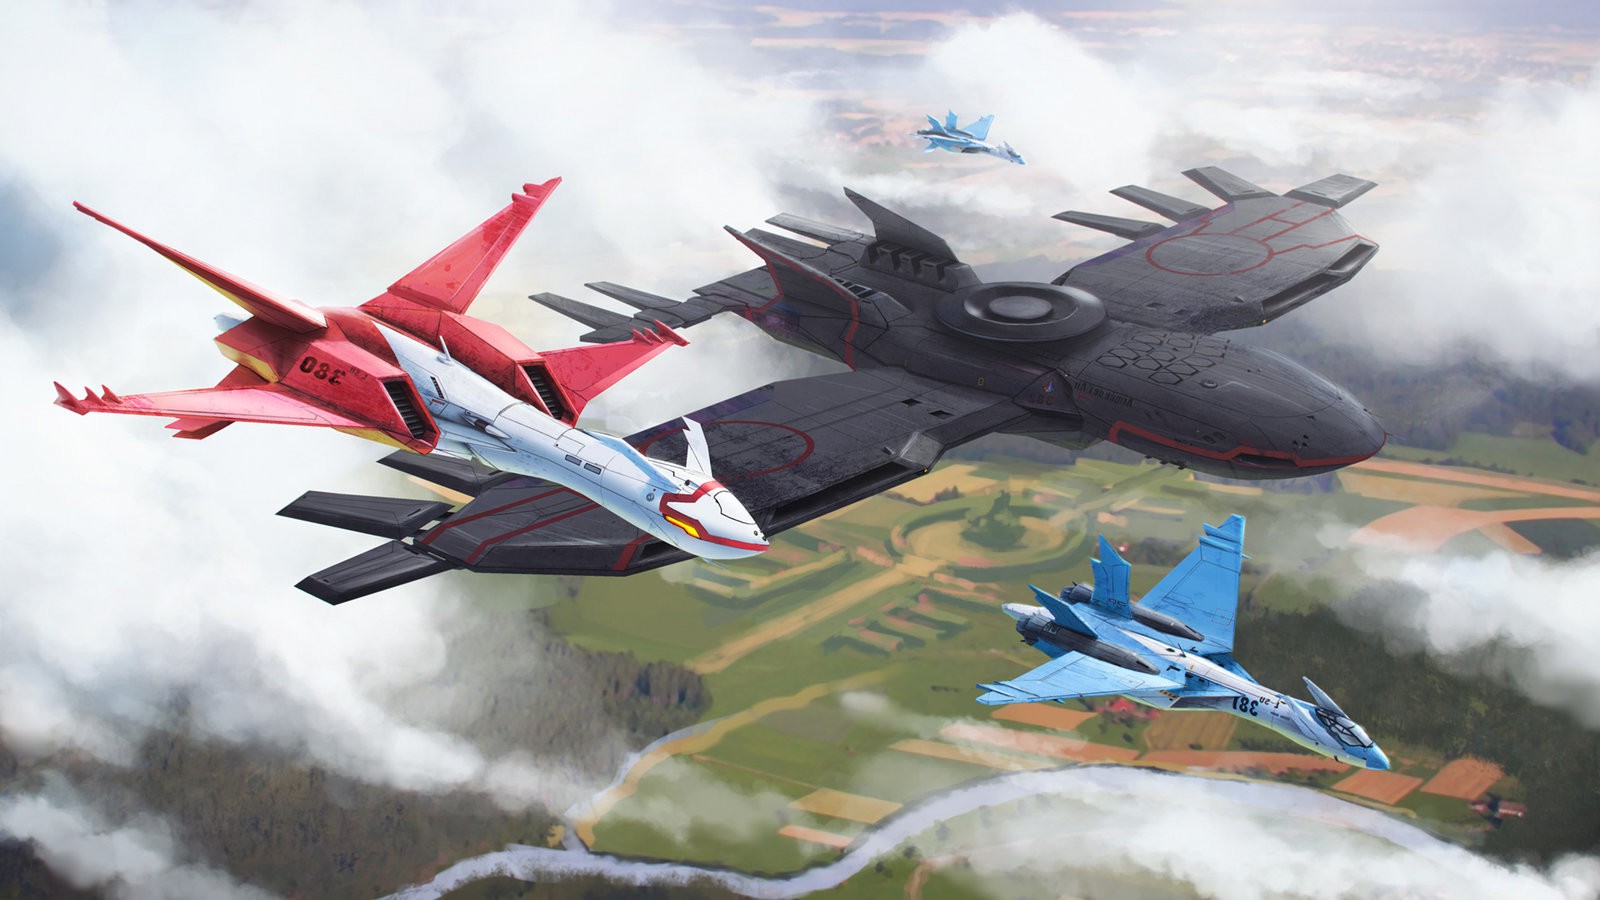 Latios Latias Jets Ace Combat Wallpapers Hd Desktop And Mobile Backgrounds